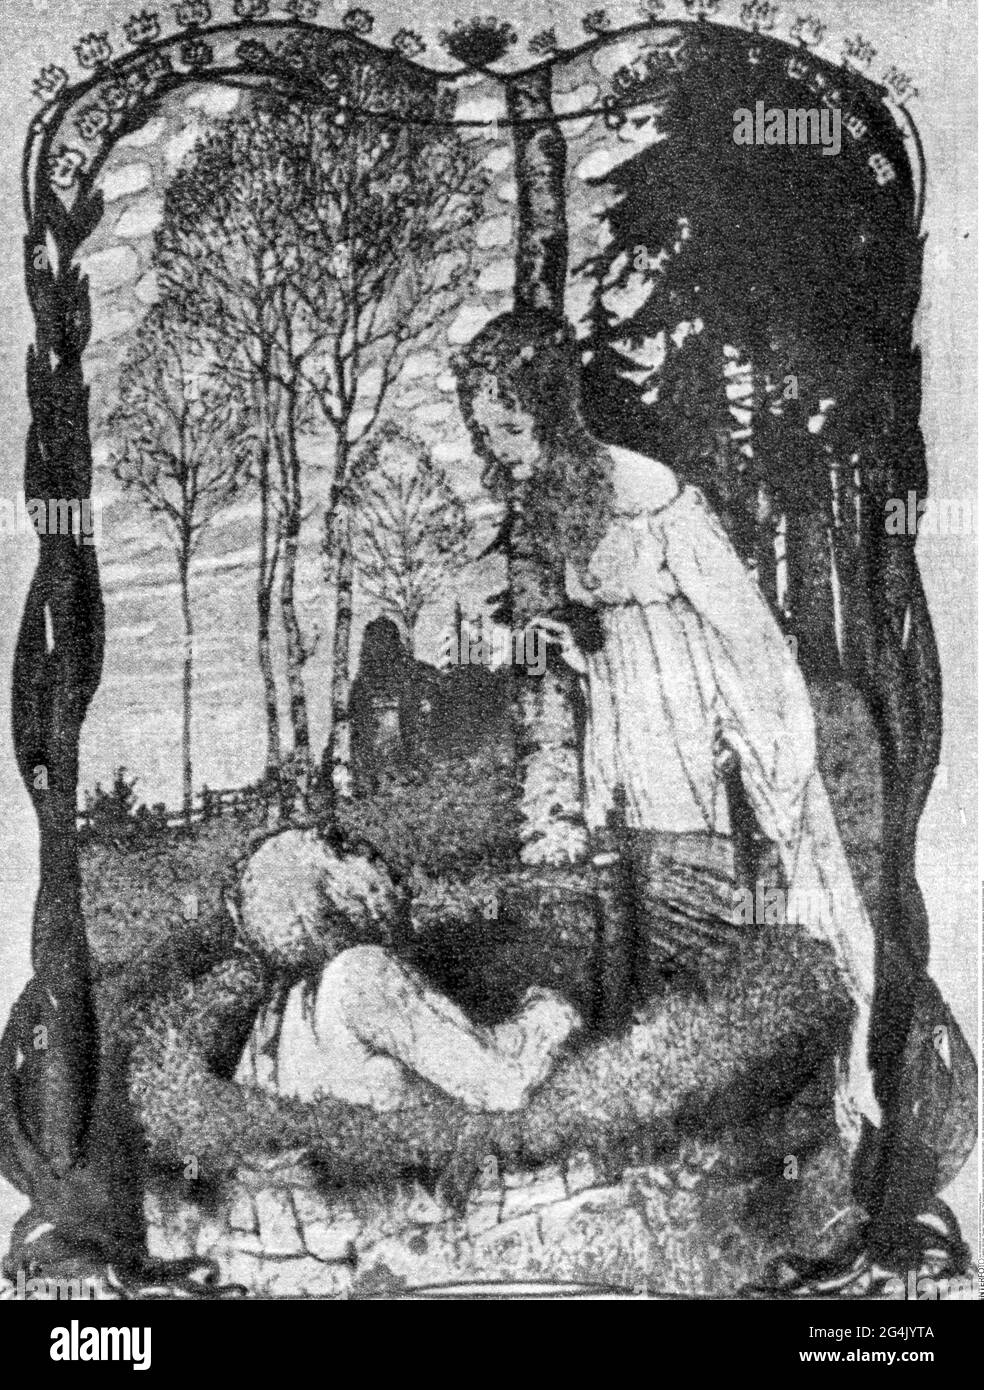 theatre / theater, play, 'The Sunken Bell' (Die versunkene Glocke), by Gerhart Hauptmann (1862 - 1946), ARTIST'S COPYRIGHT HAS NOT TO BE CLEARED Stock Photo